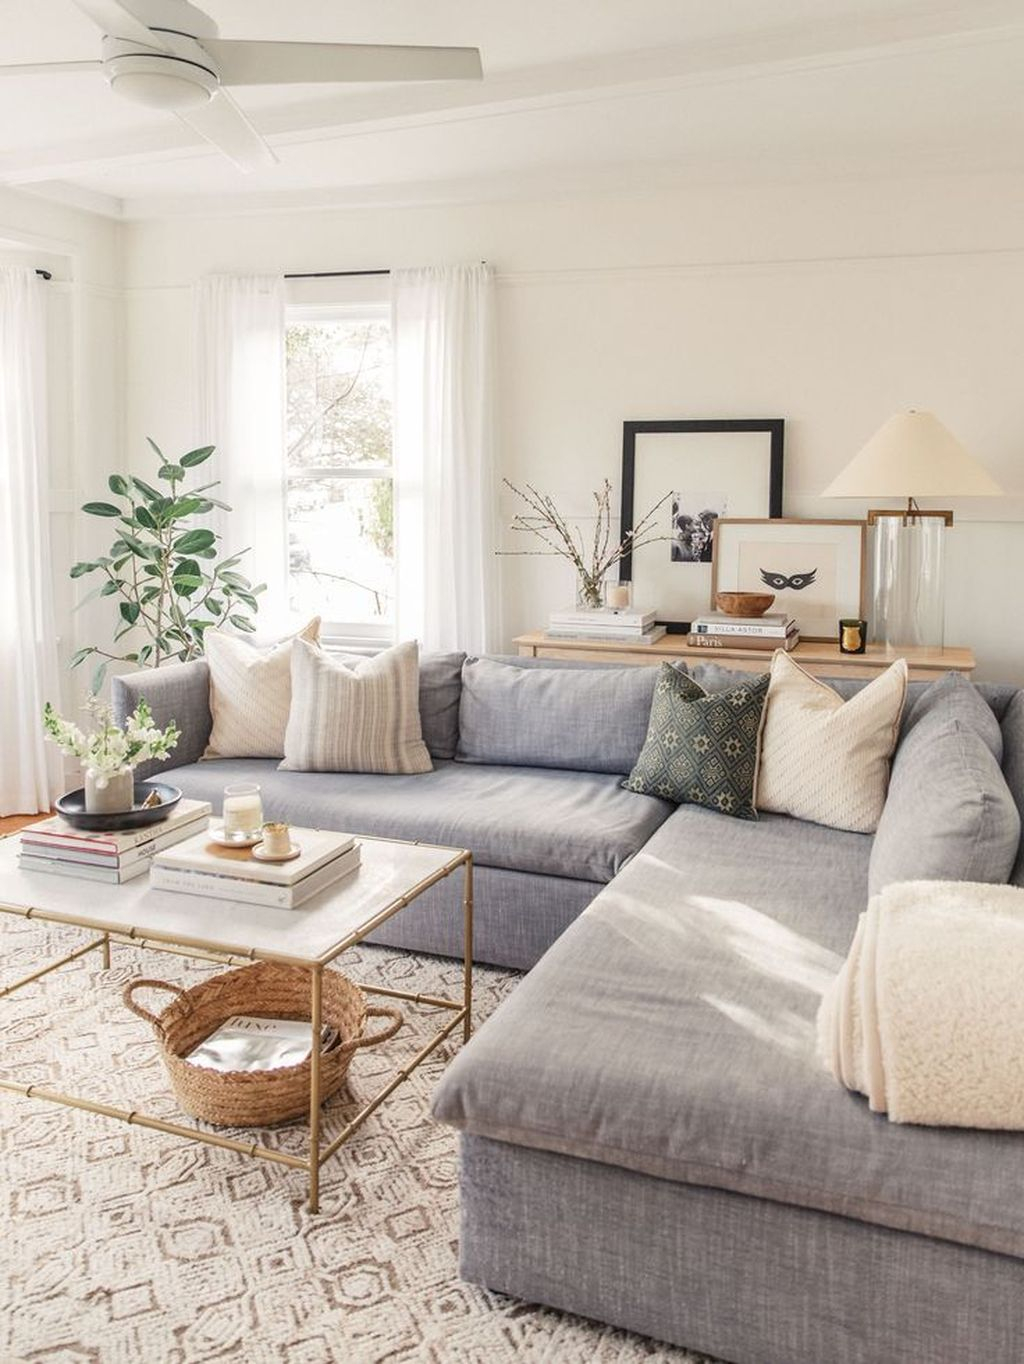 Excellent Furniture Design Ideas For Your Living Room 21